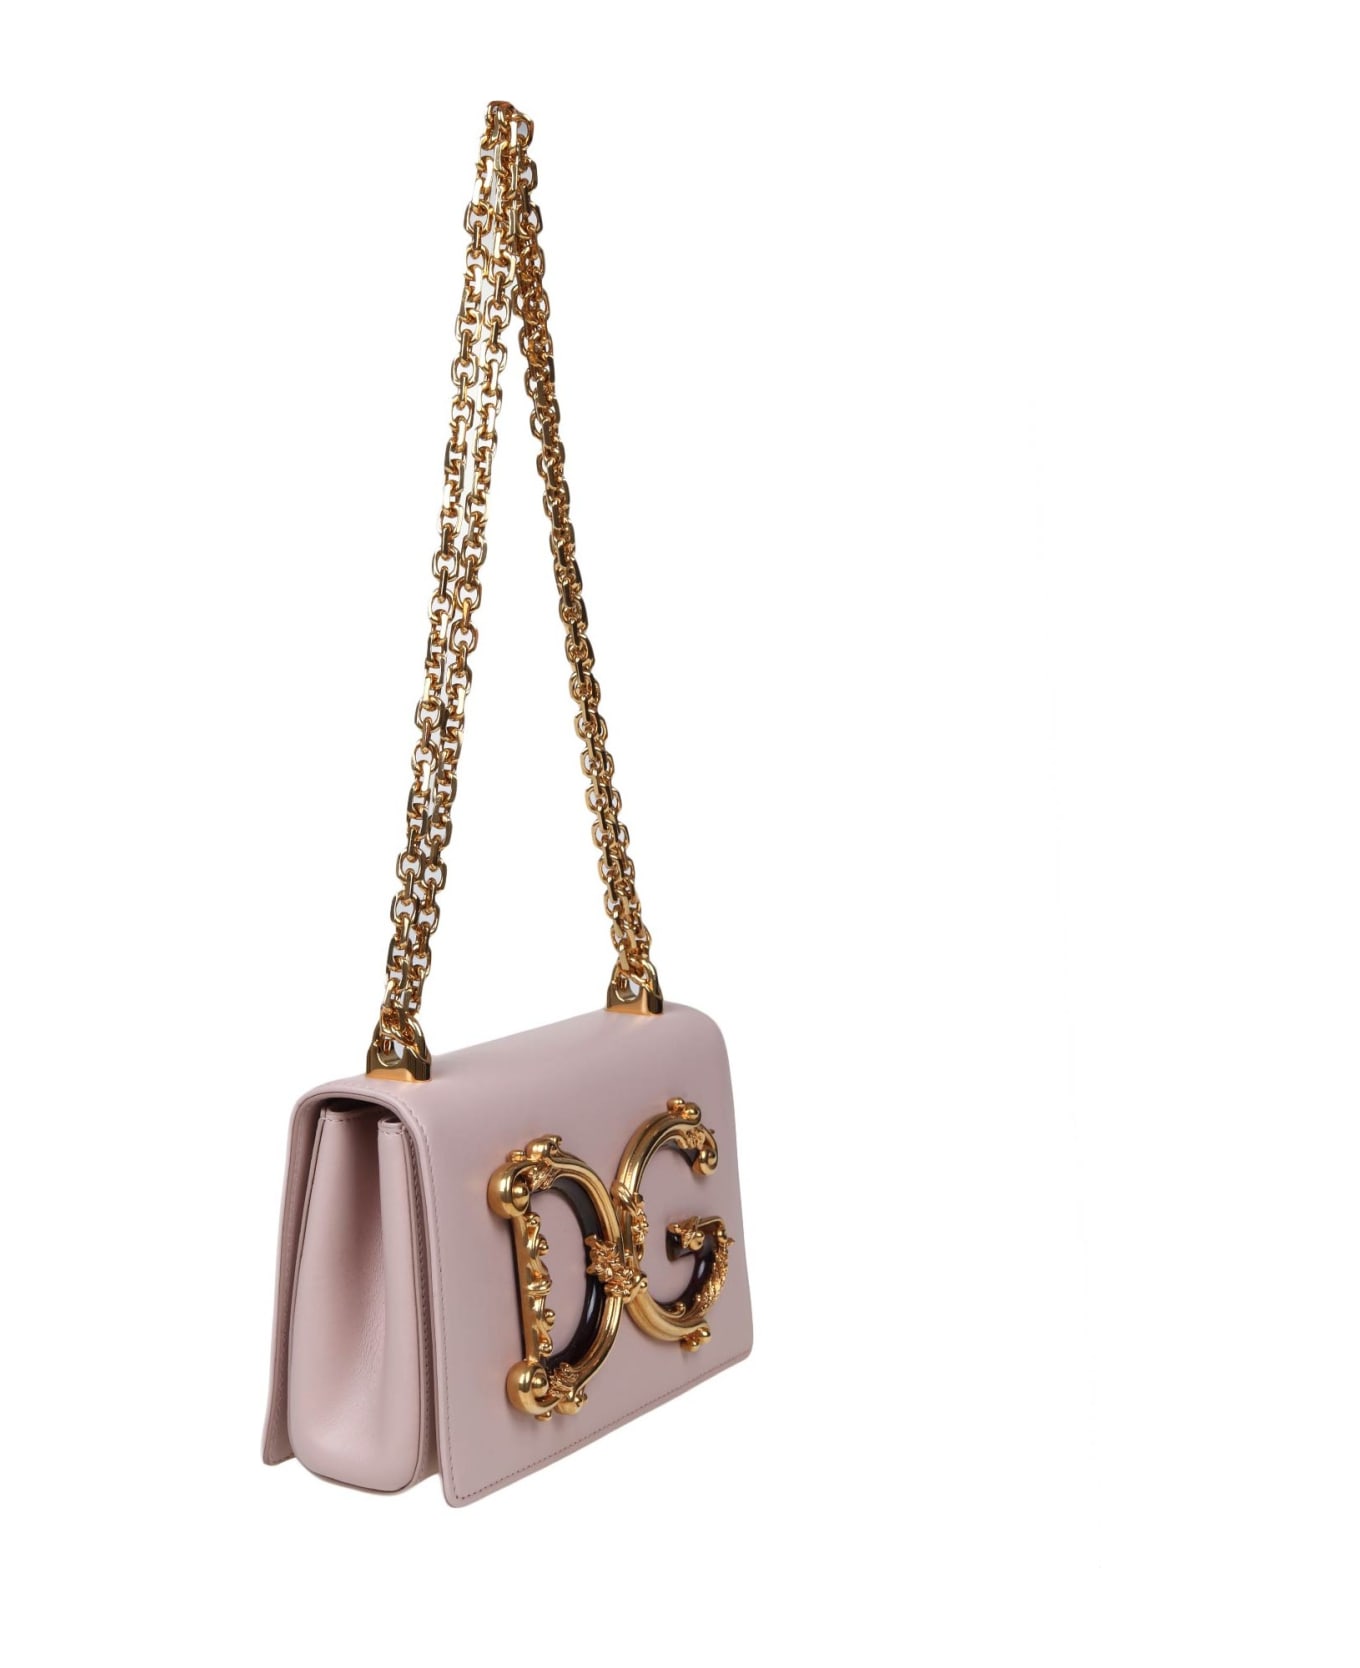 Dolce & Gabbana Dg Girls Shoulder Bag In Powder Color Nappa - POWDER